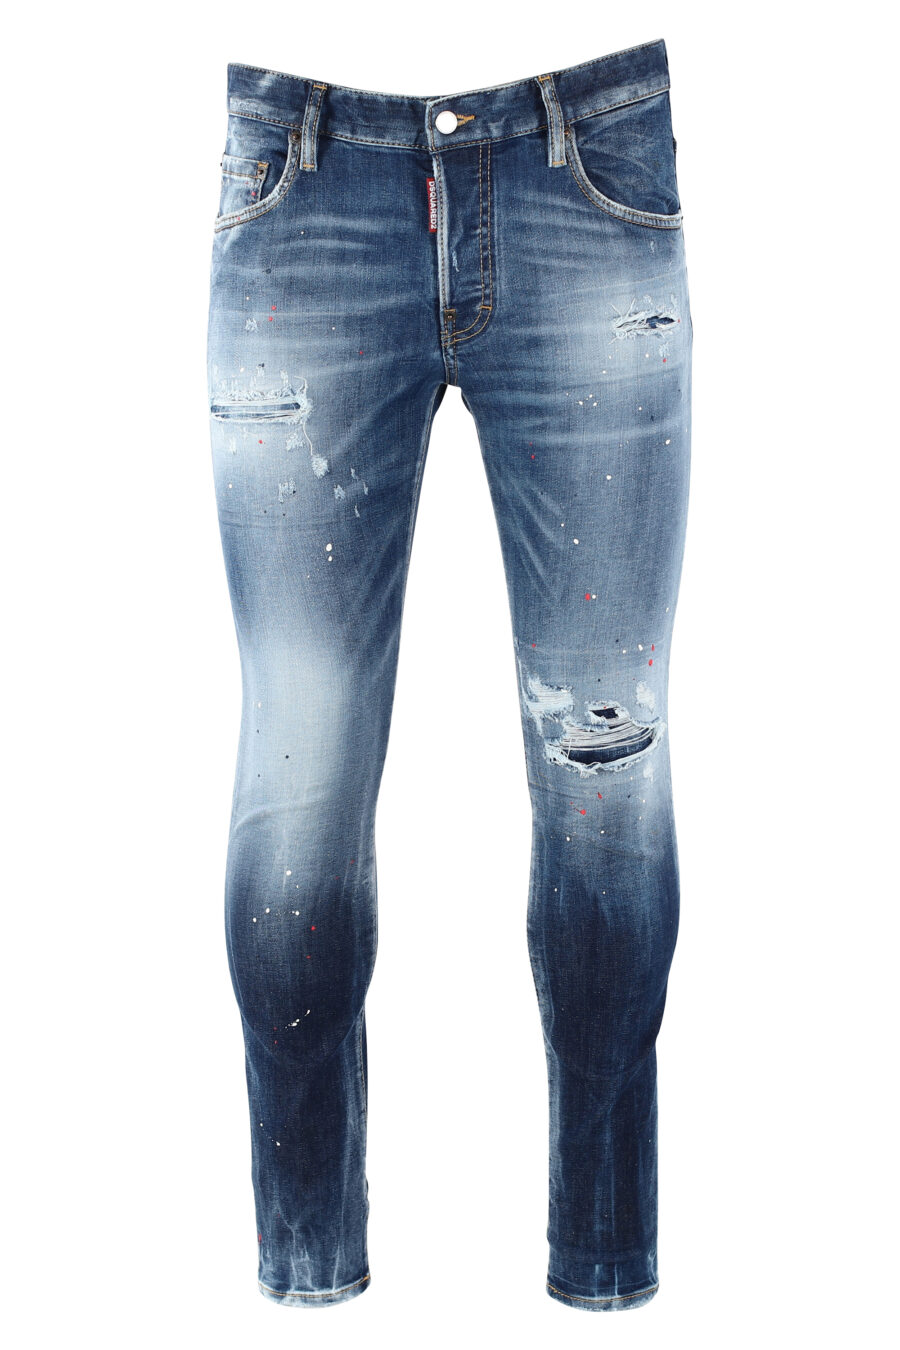 Pantalón vaquero "super twinky jean" azul desgastado con rotos - IMG 9665